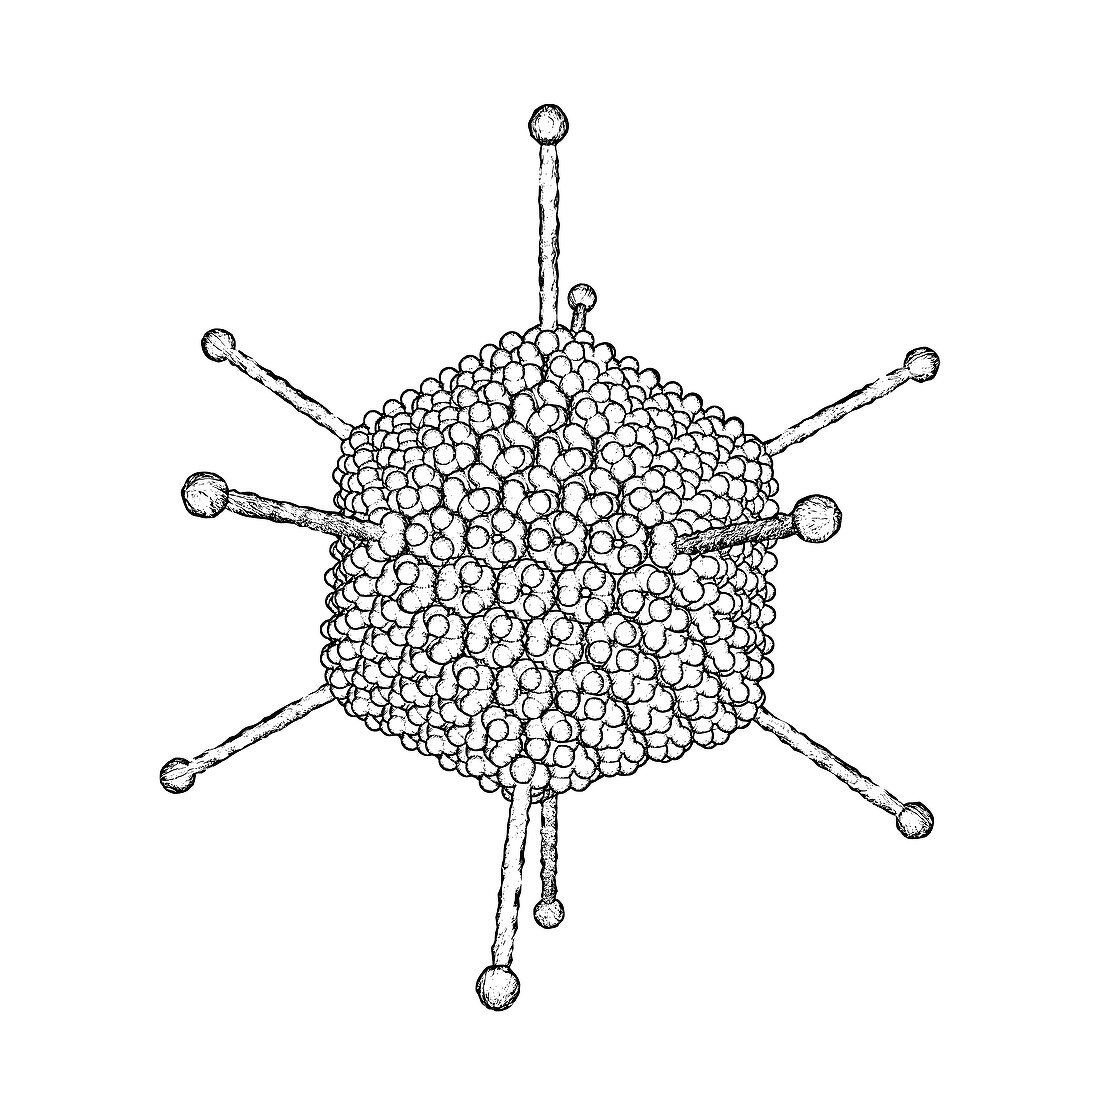 Adenovirus,artwork